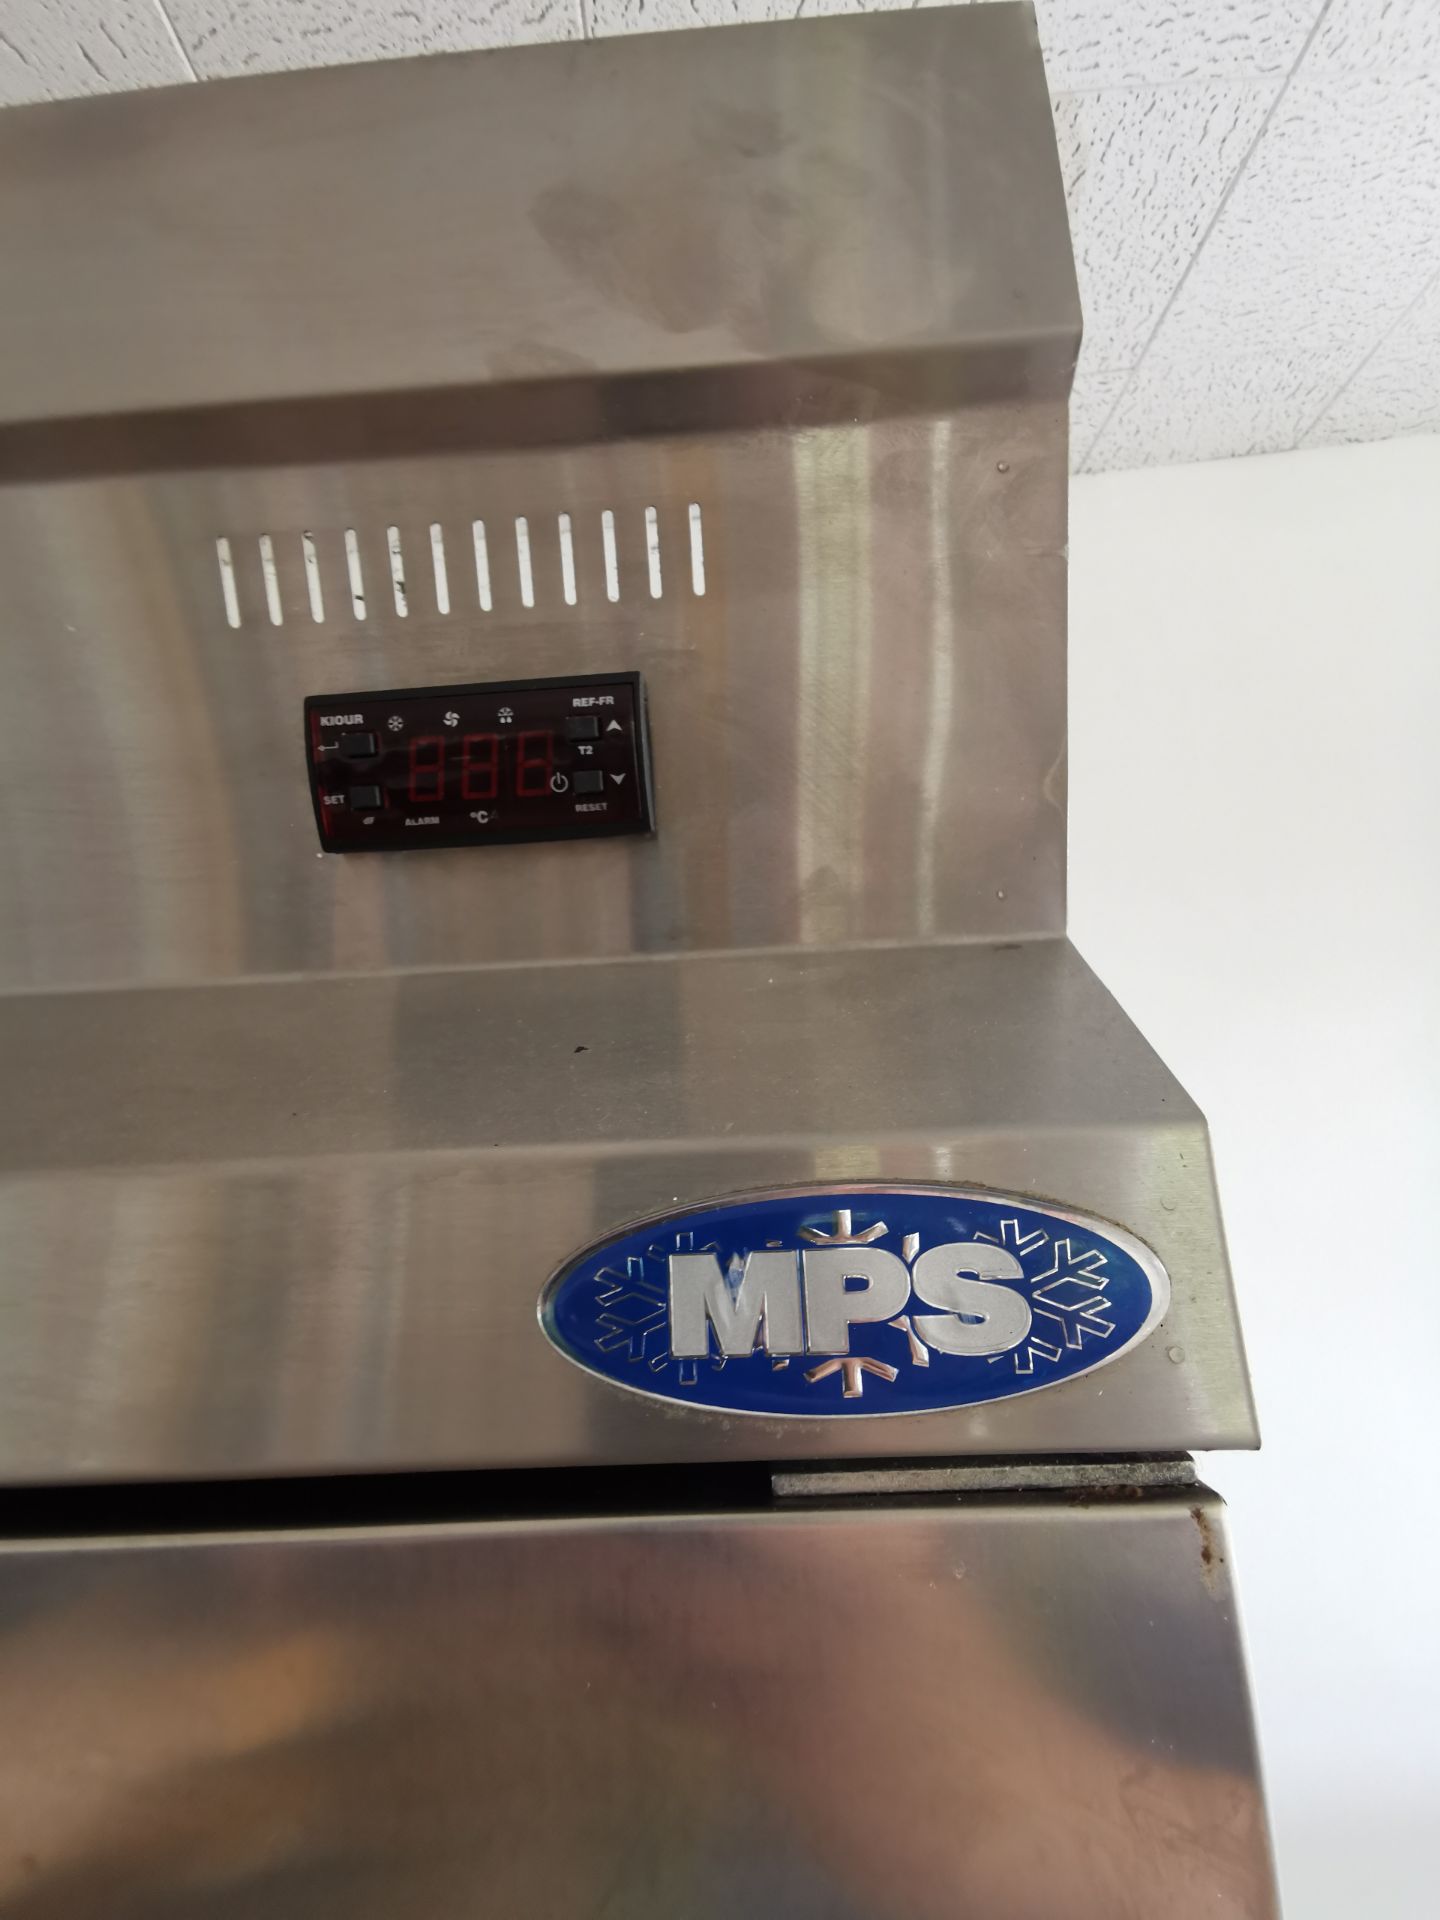 MPS Large commercial double fridge freezer - Image 3 of 3